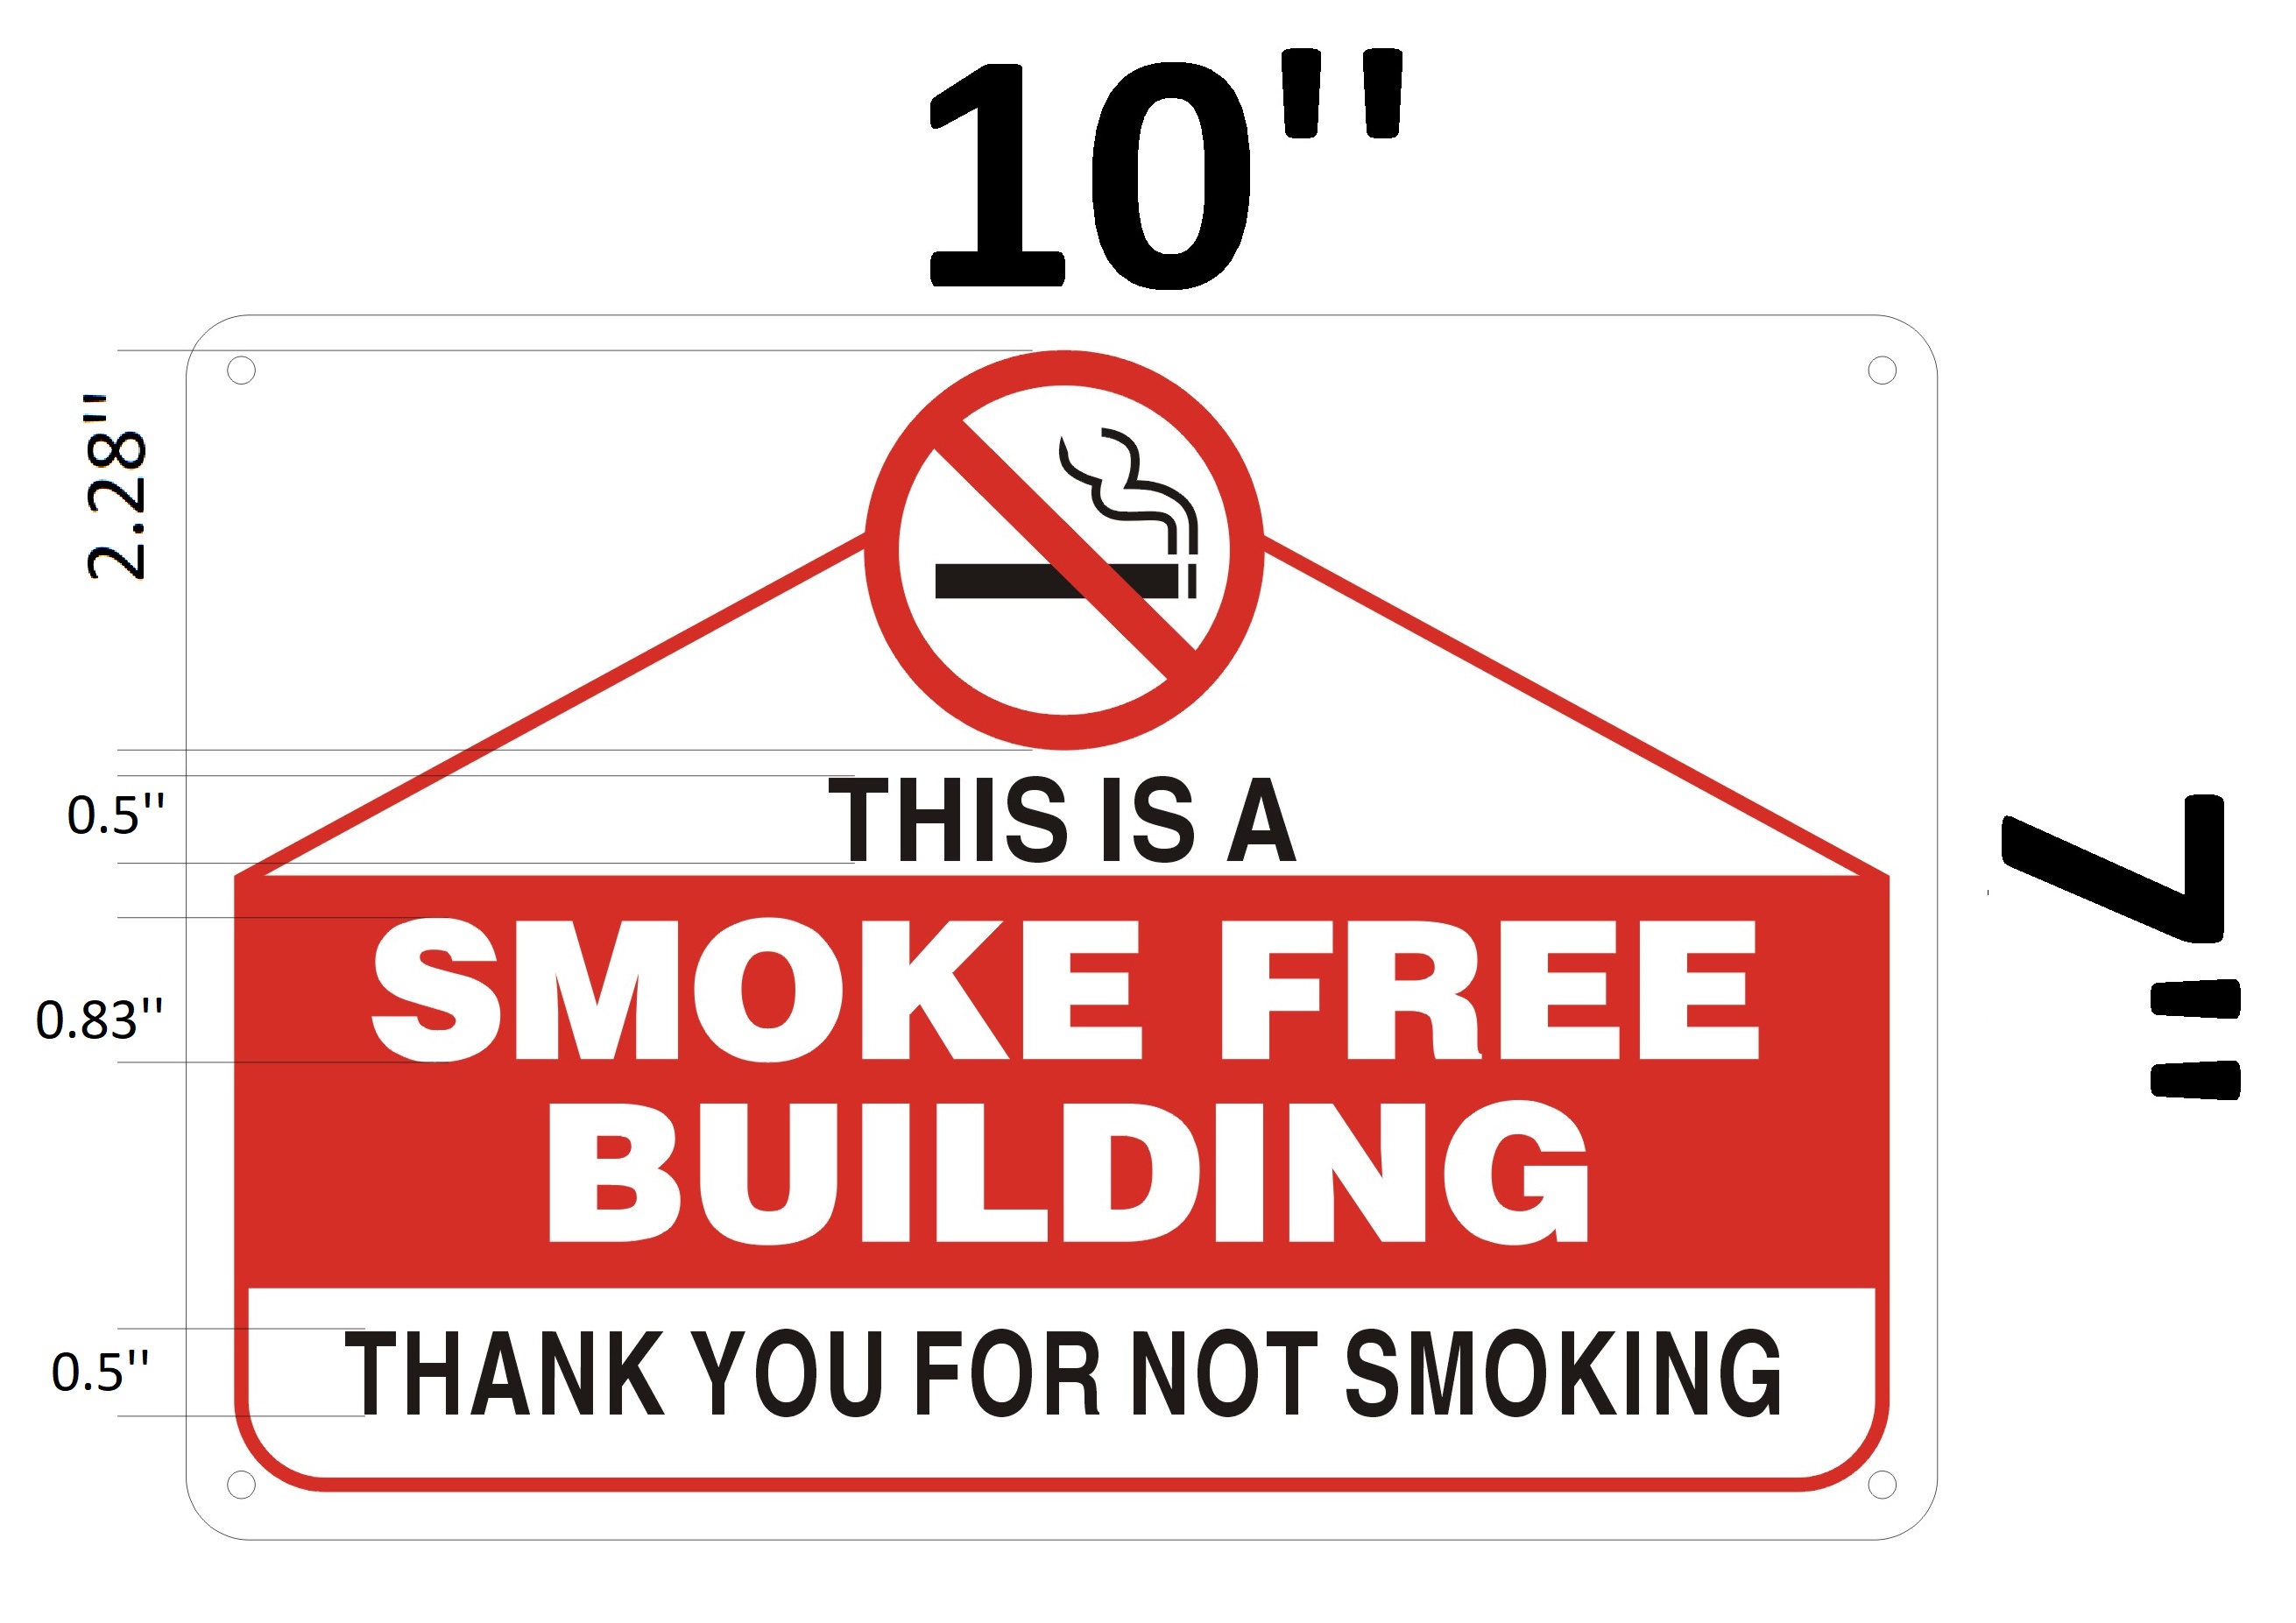 No smoking building. No smoking sign. Thank you for no smoking.